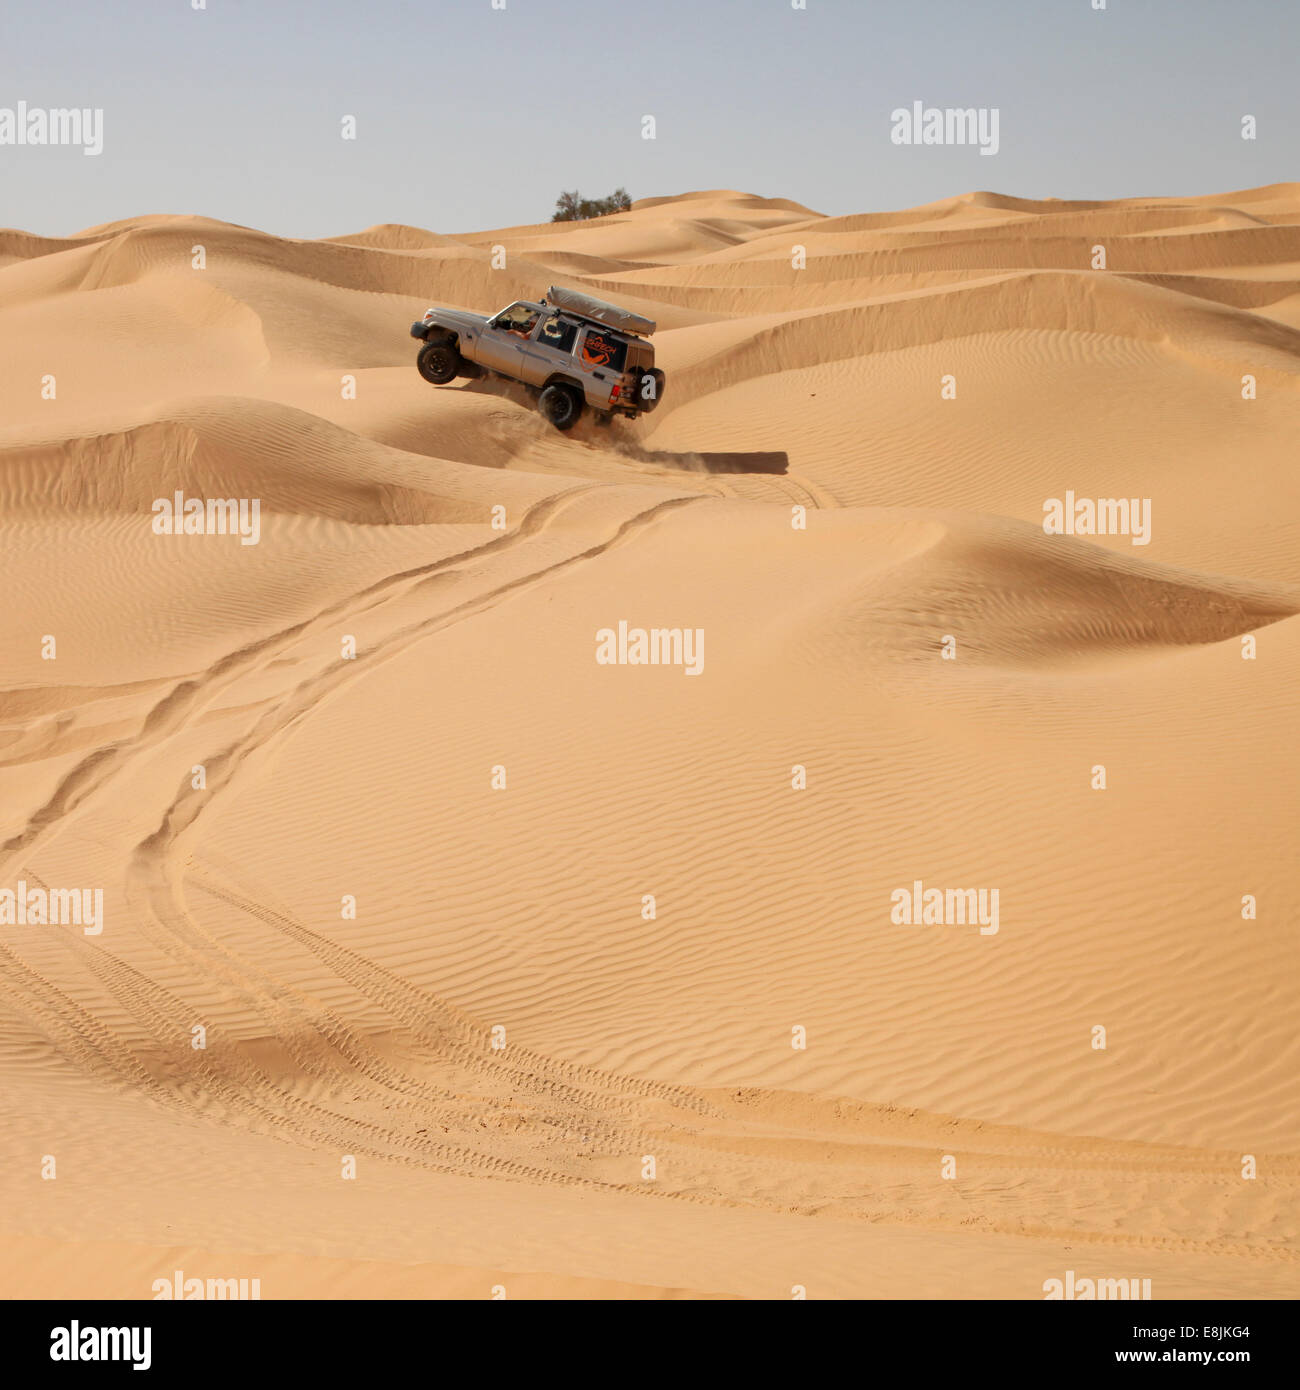 Vehicle in the desert. Stock Photo